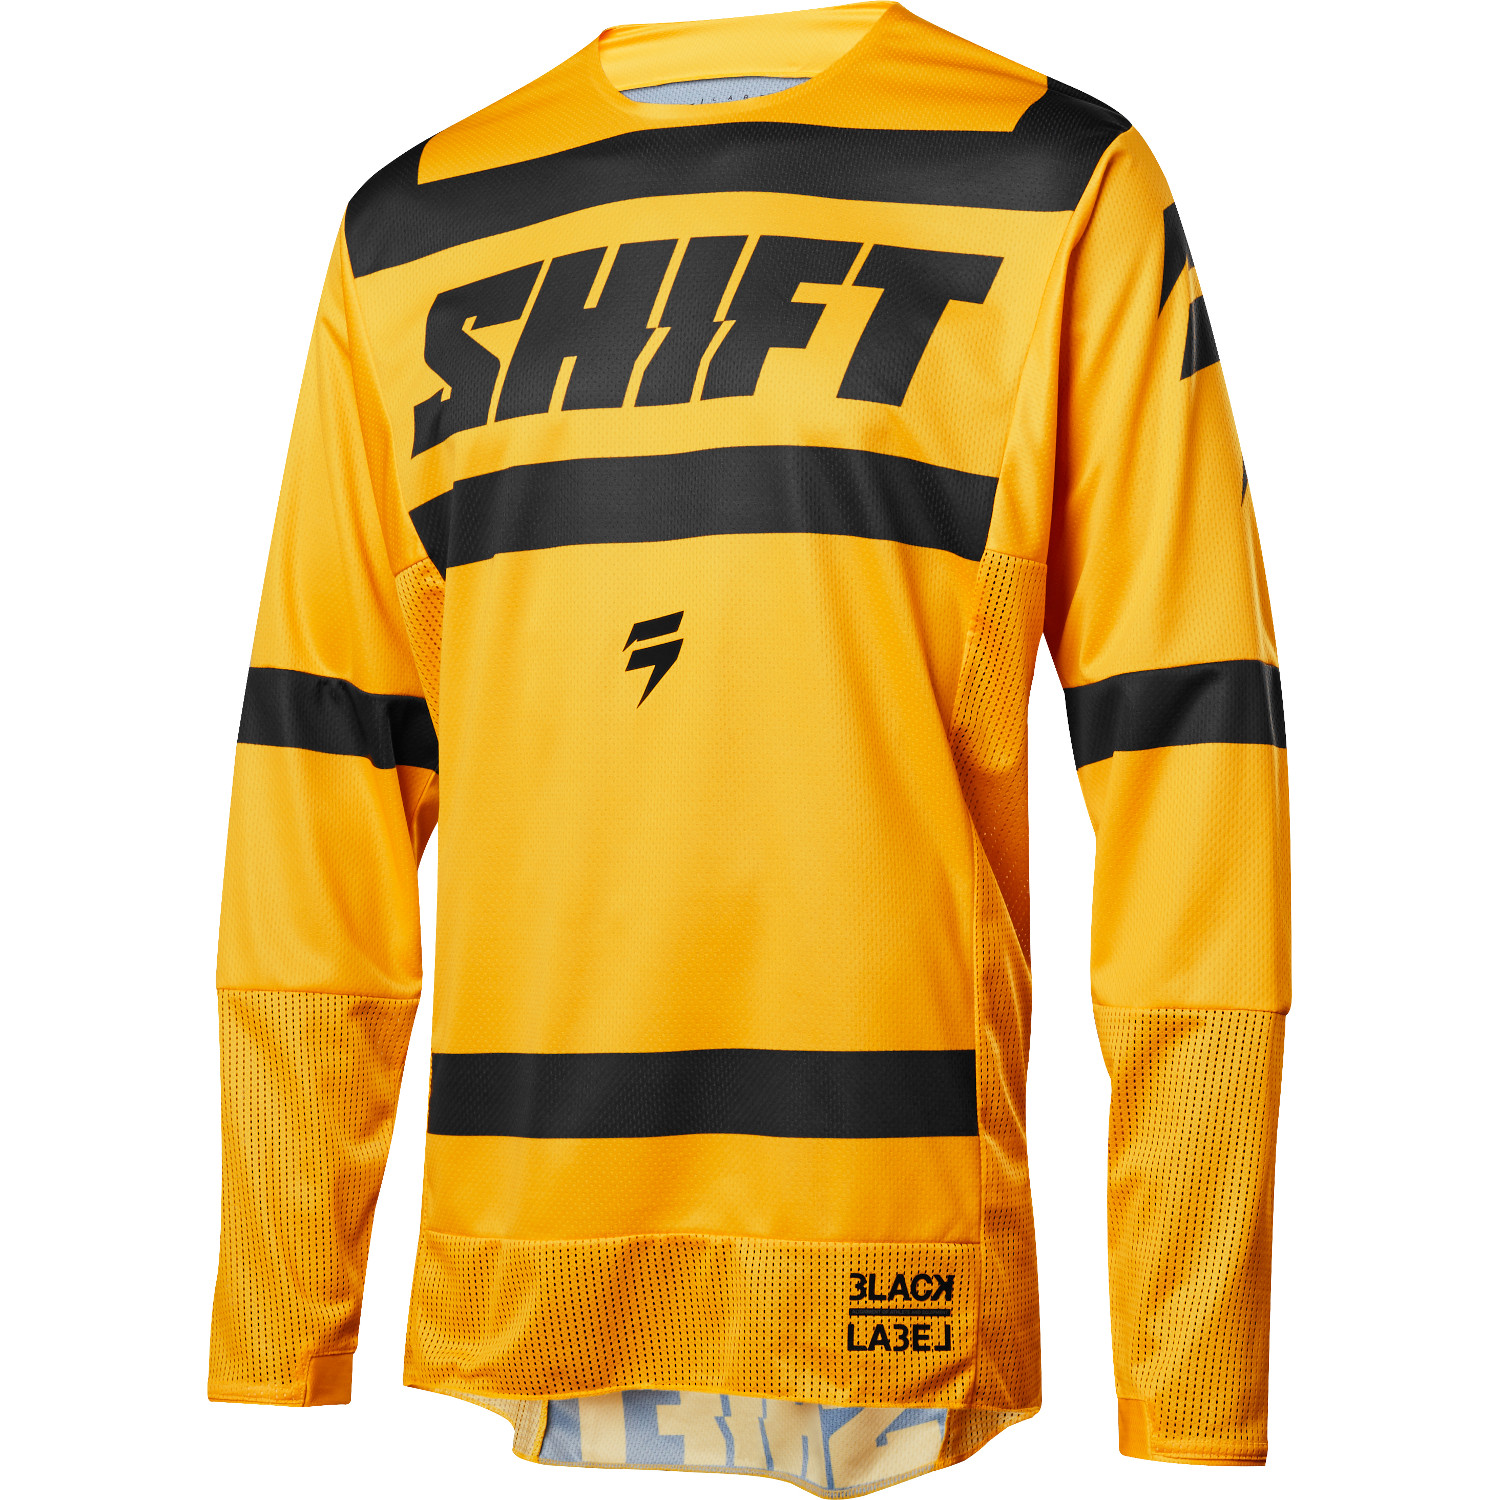 Shift Maillot MX 3lack Label Strike - Yellow